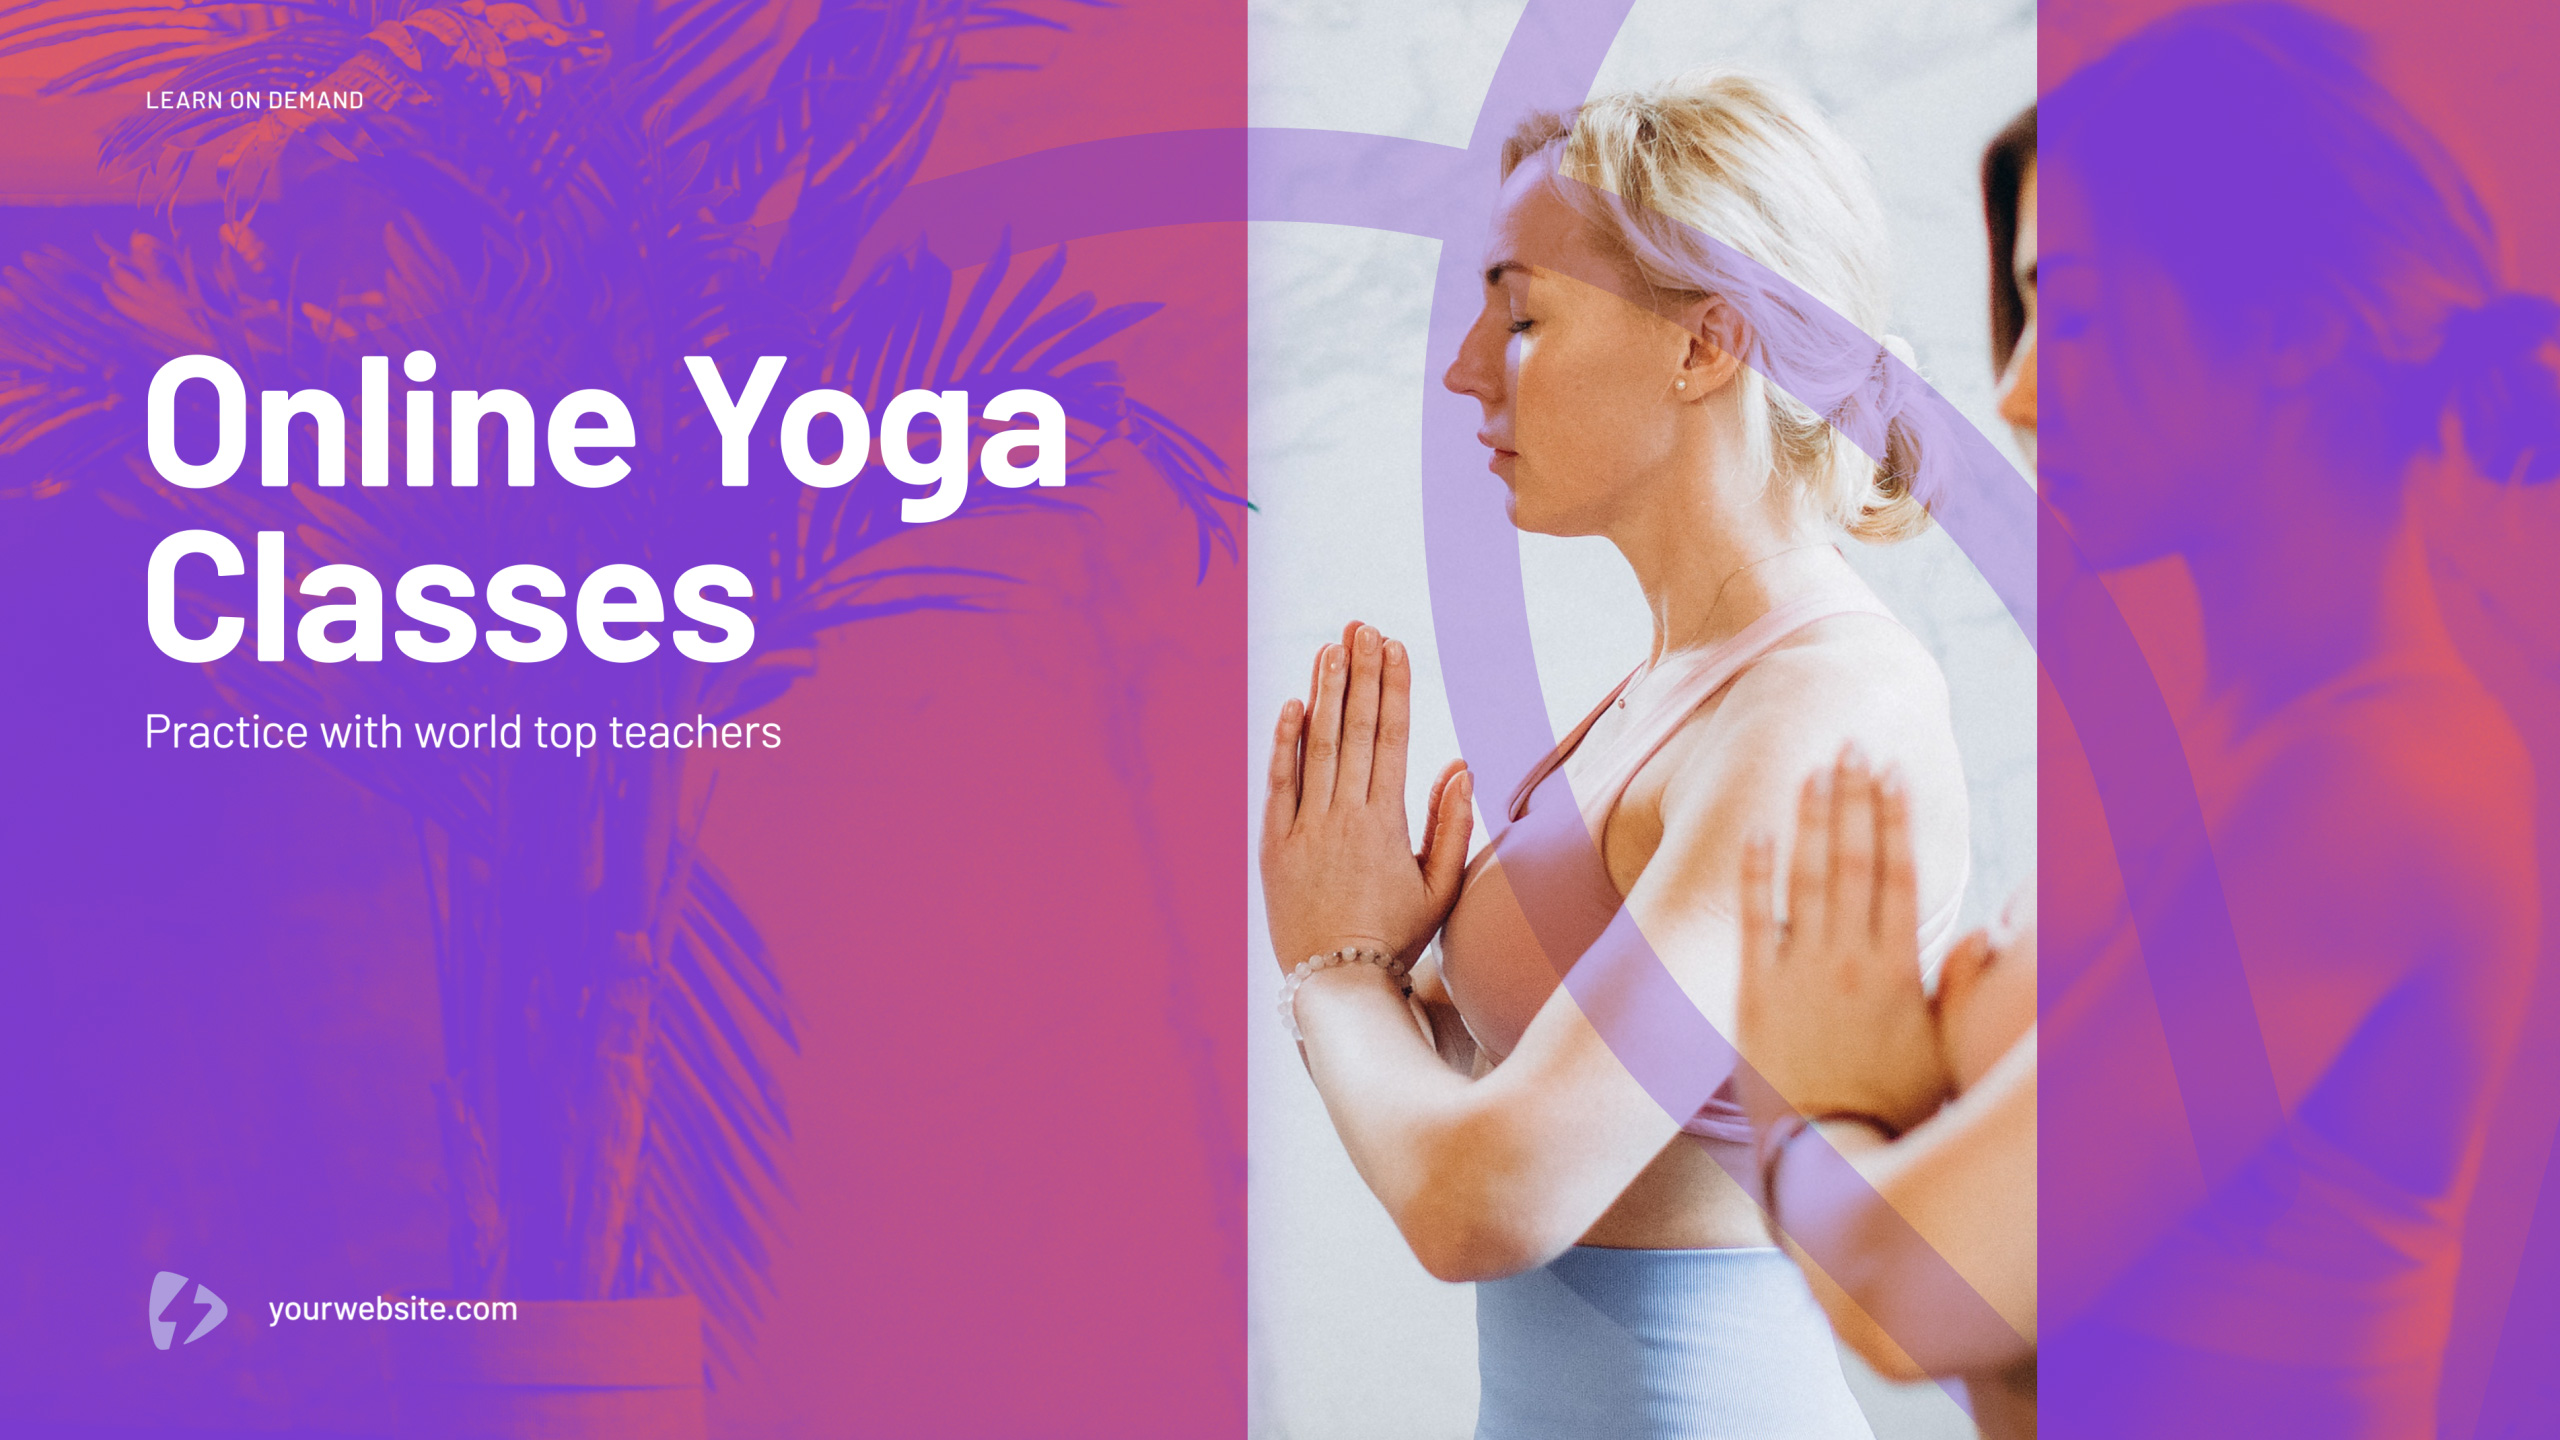 Yoga Poster Design  Online Yoga Classes